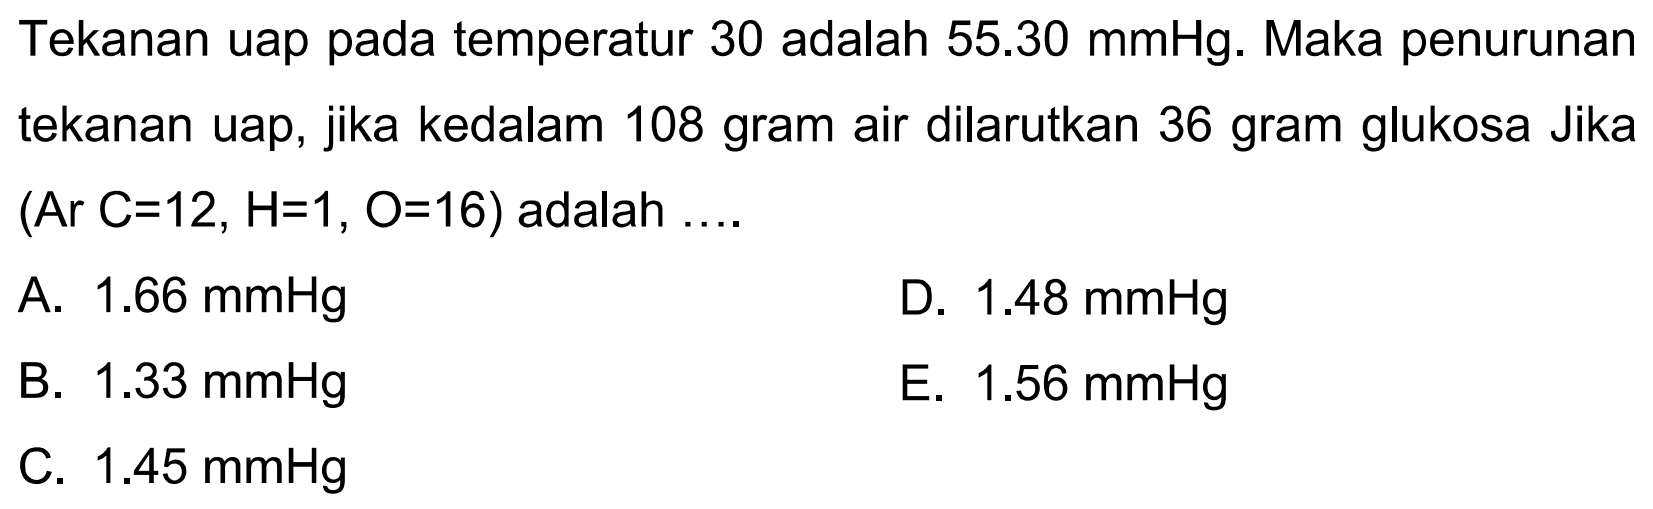 Tekanan uap pada temperatur 30 adalah  55.30 mmHg . Maka penurunan tekanan uap, jika kedalam 108 gram air dilarutkan 36 gram glukosa Jika  (Ar C=12, H=1, O=16)  adalah ....